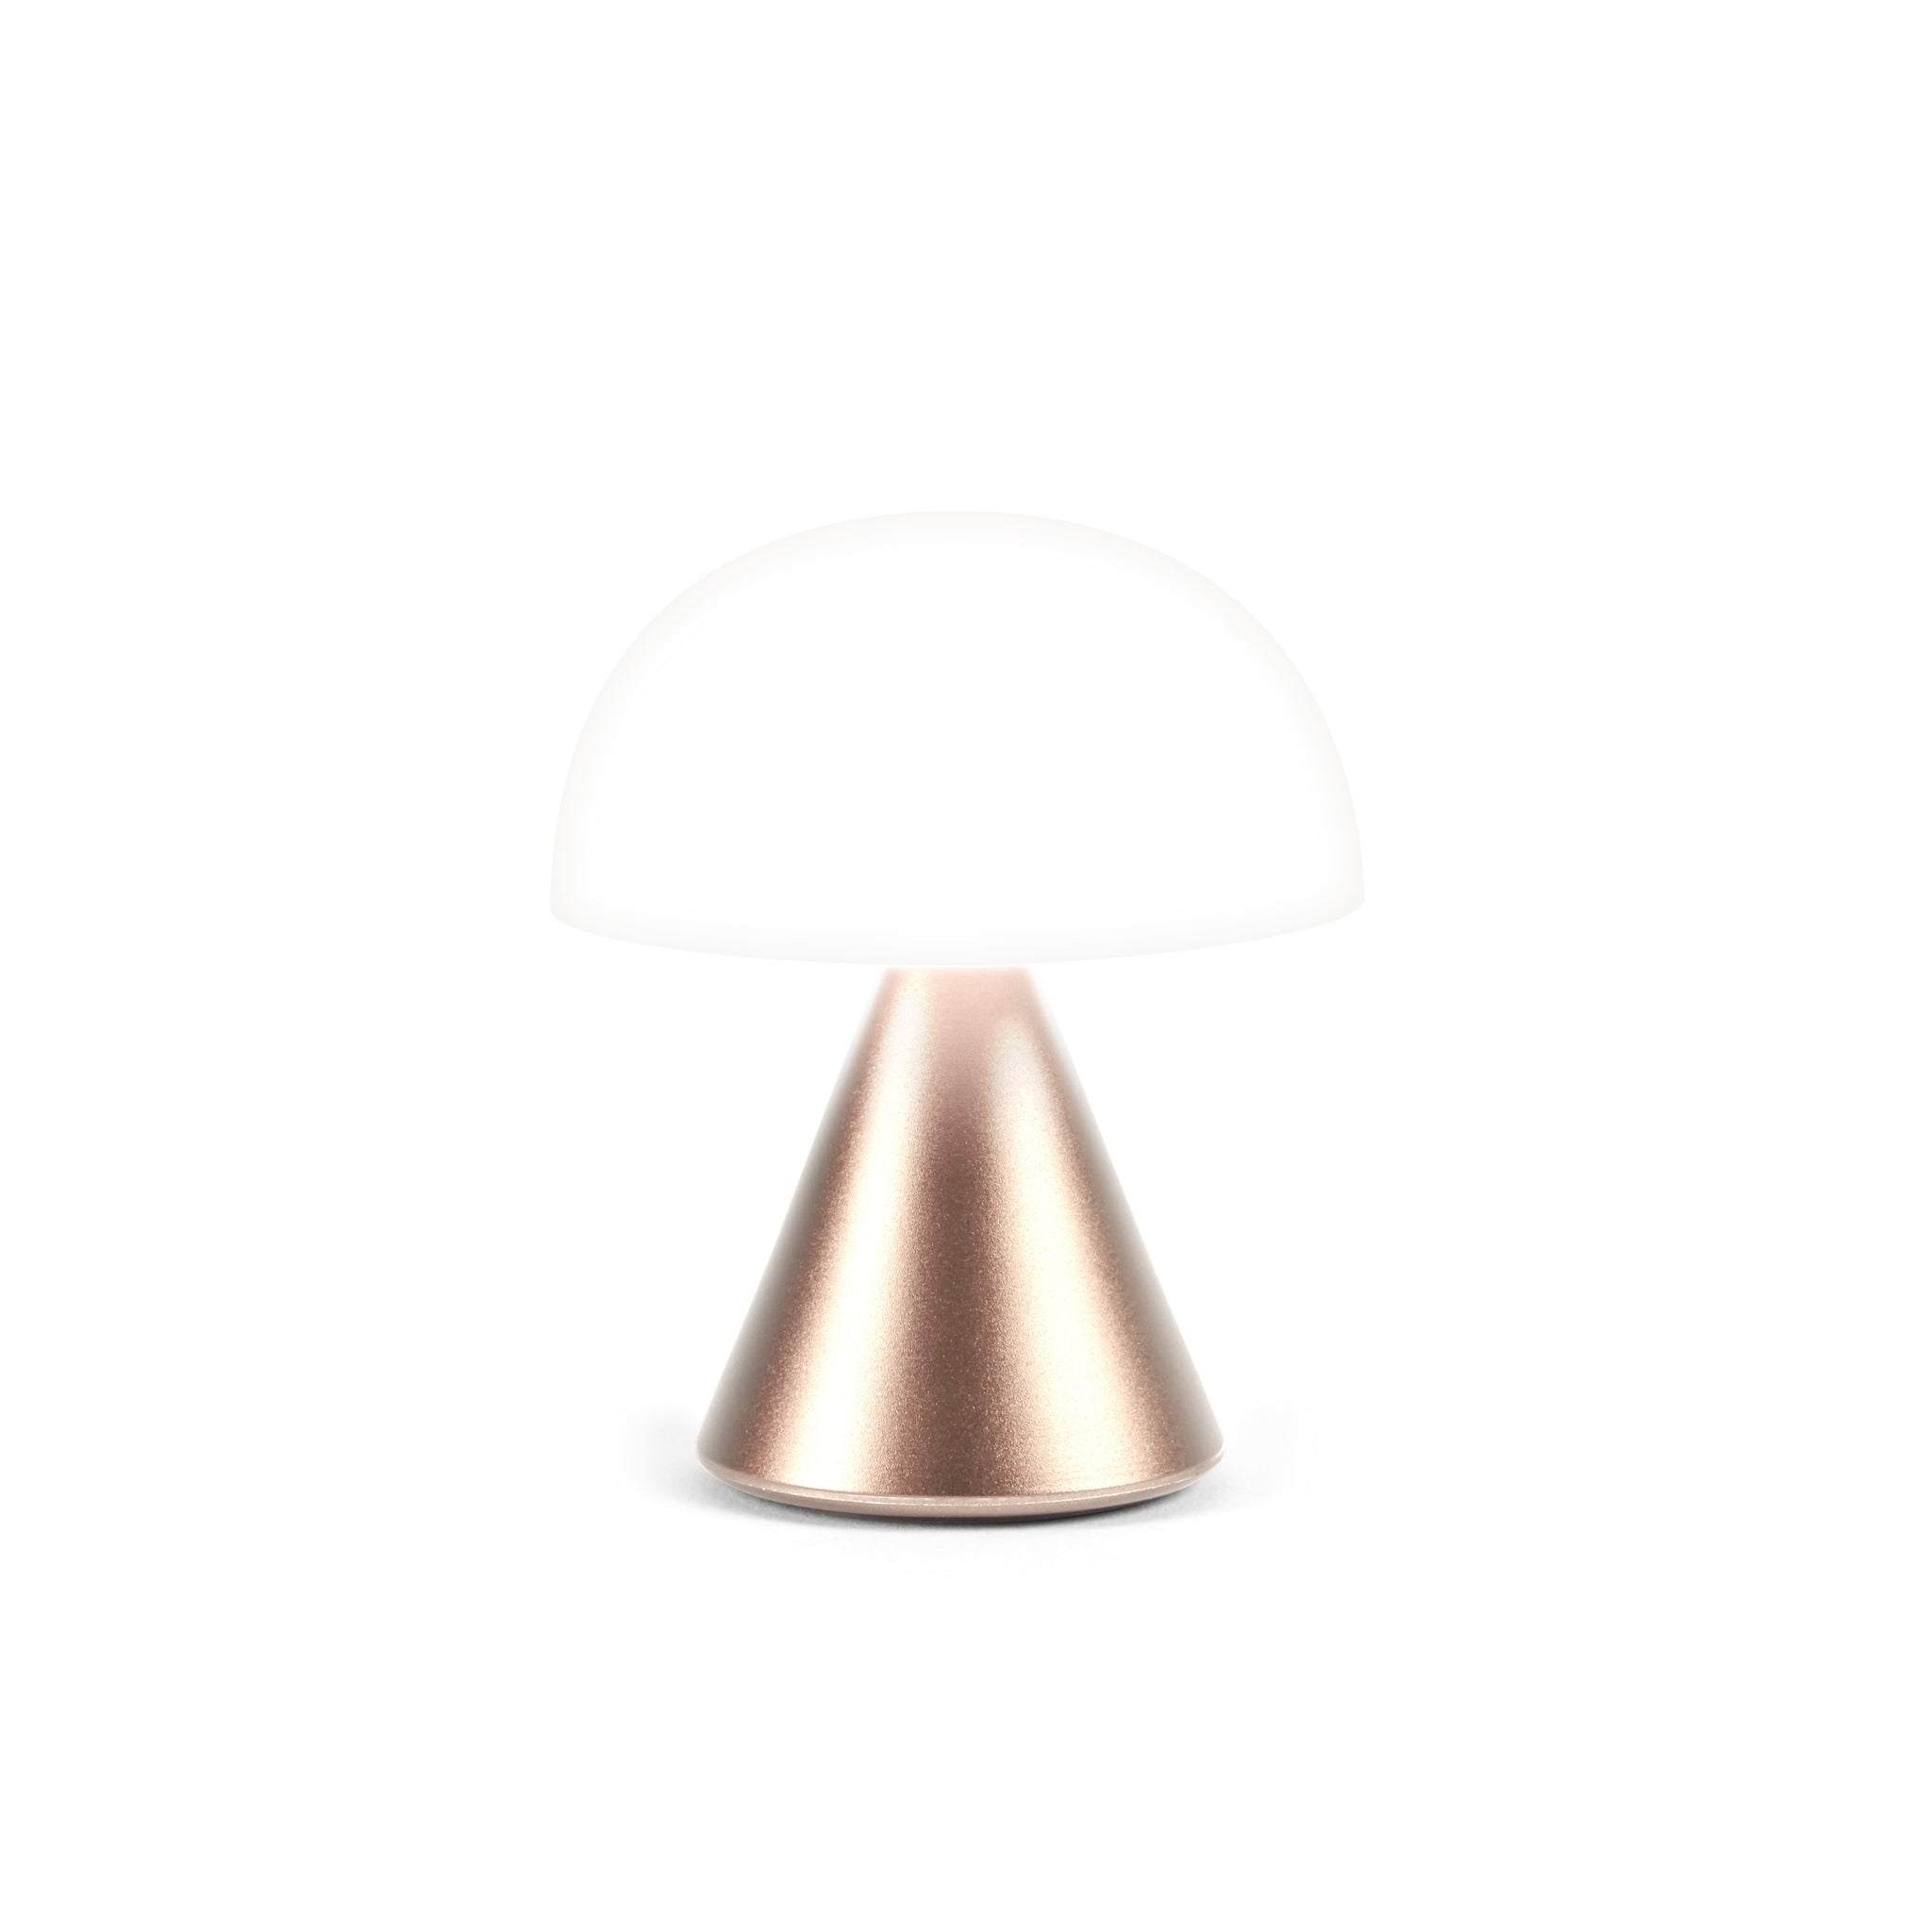 Lexon Mina Small Soft Gold│Oplaadbare LED lamp│art. LH60MD│vooraanzicht met wit licht aan